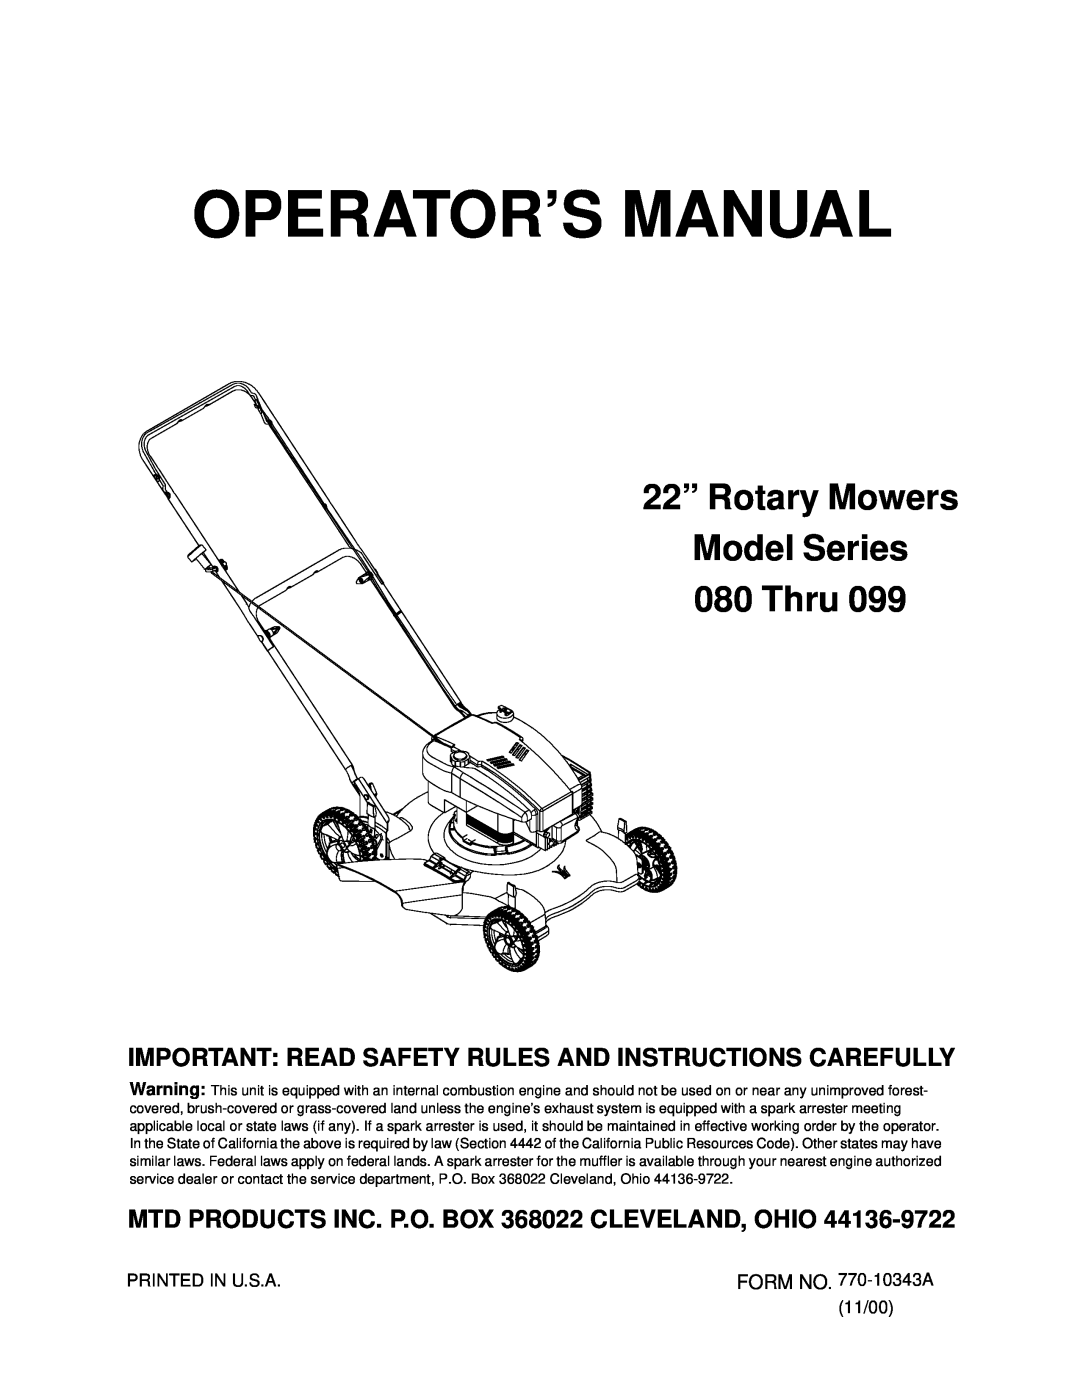 MTD 080 Thru 099 manual Operator’S Manual, 22” Rotary Mowers Model Series 080 Thru 